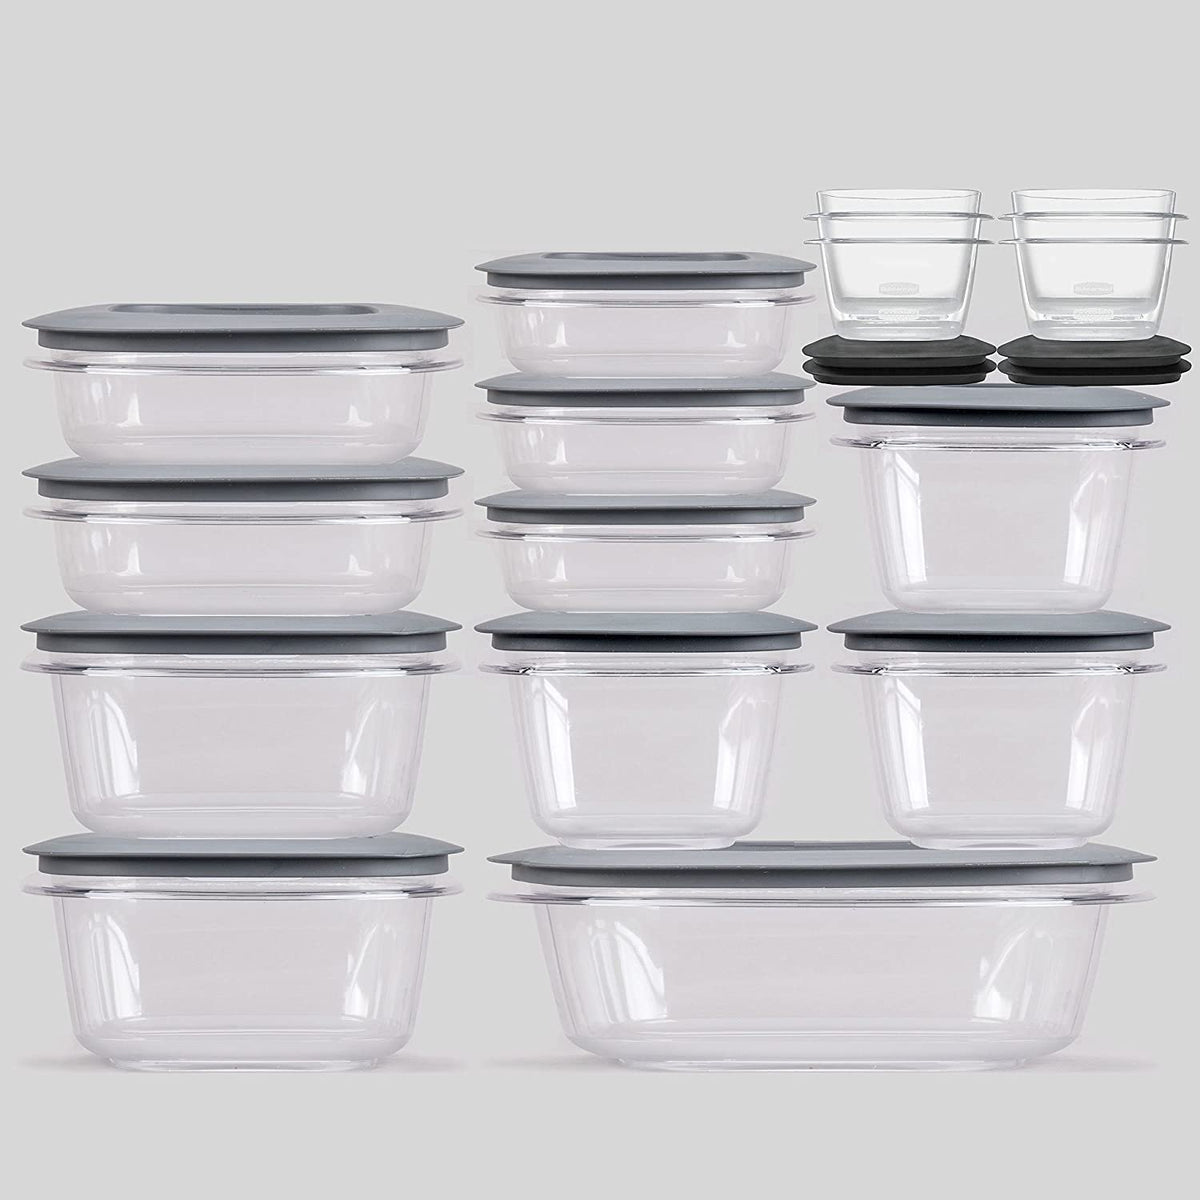 Rubbermaid Meal Prep Premier Food Storage Container, Grey, 10 Piece Set